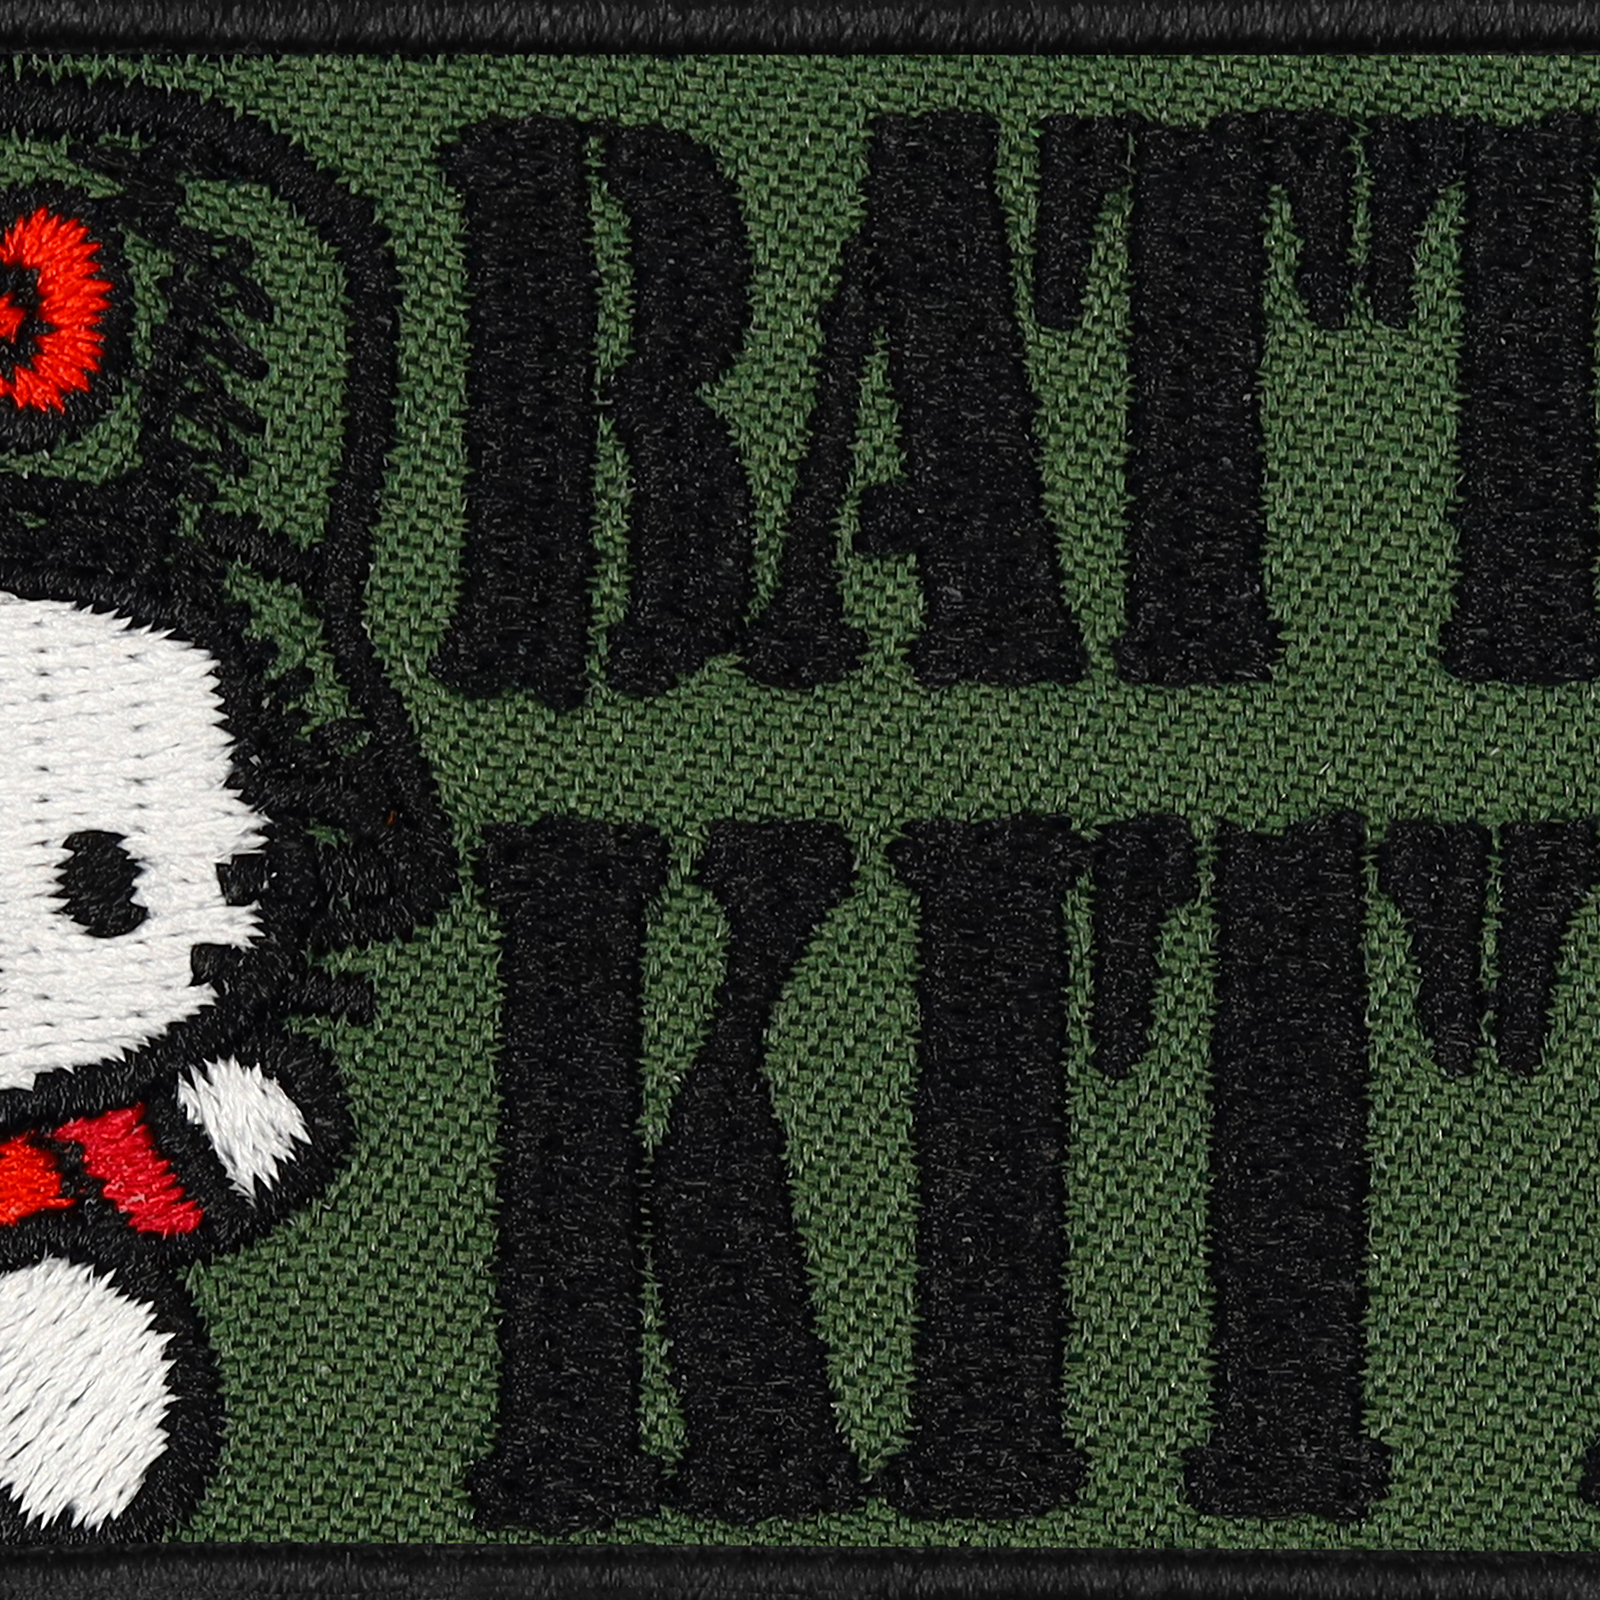 Battle Kitty - Patch